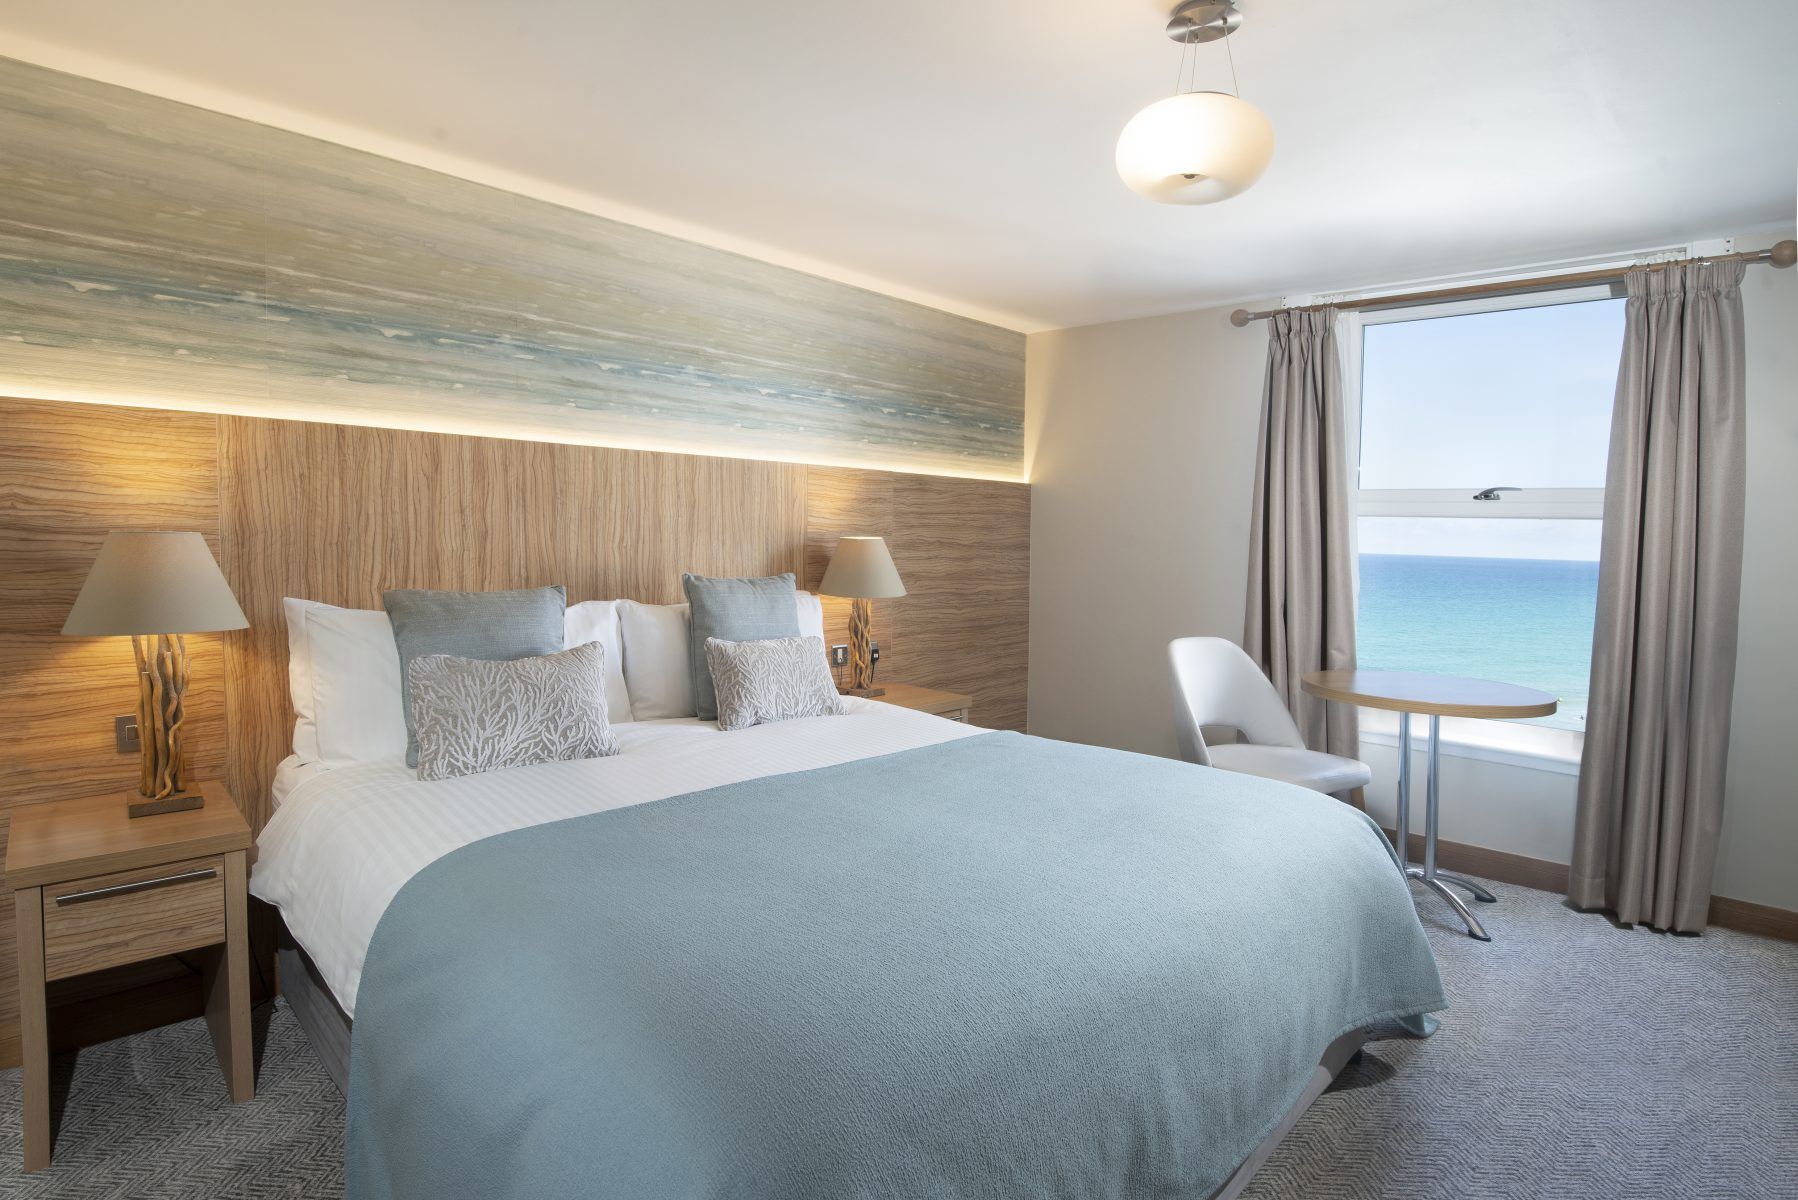 Fistral Beach sea view bedroom